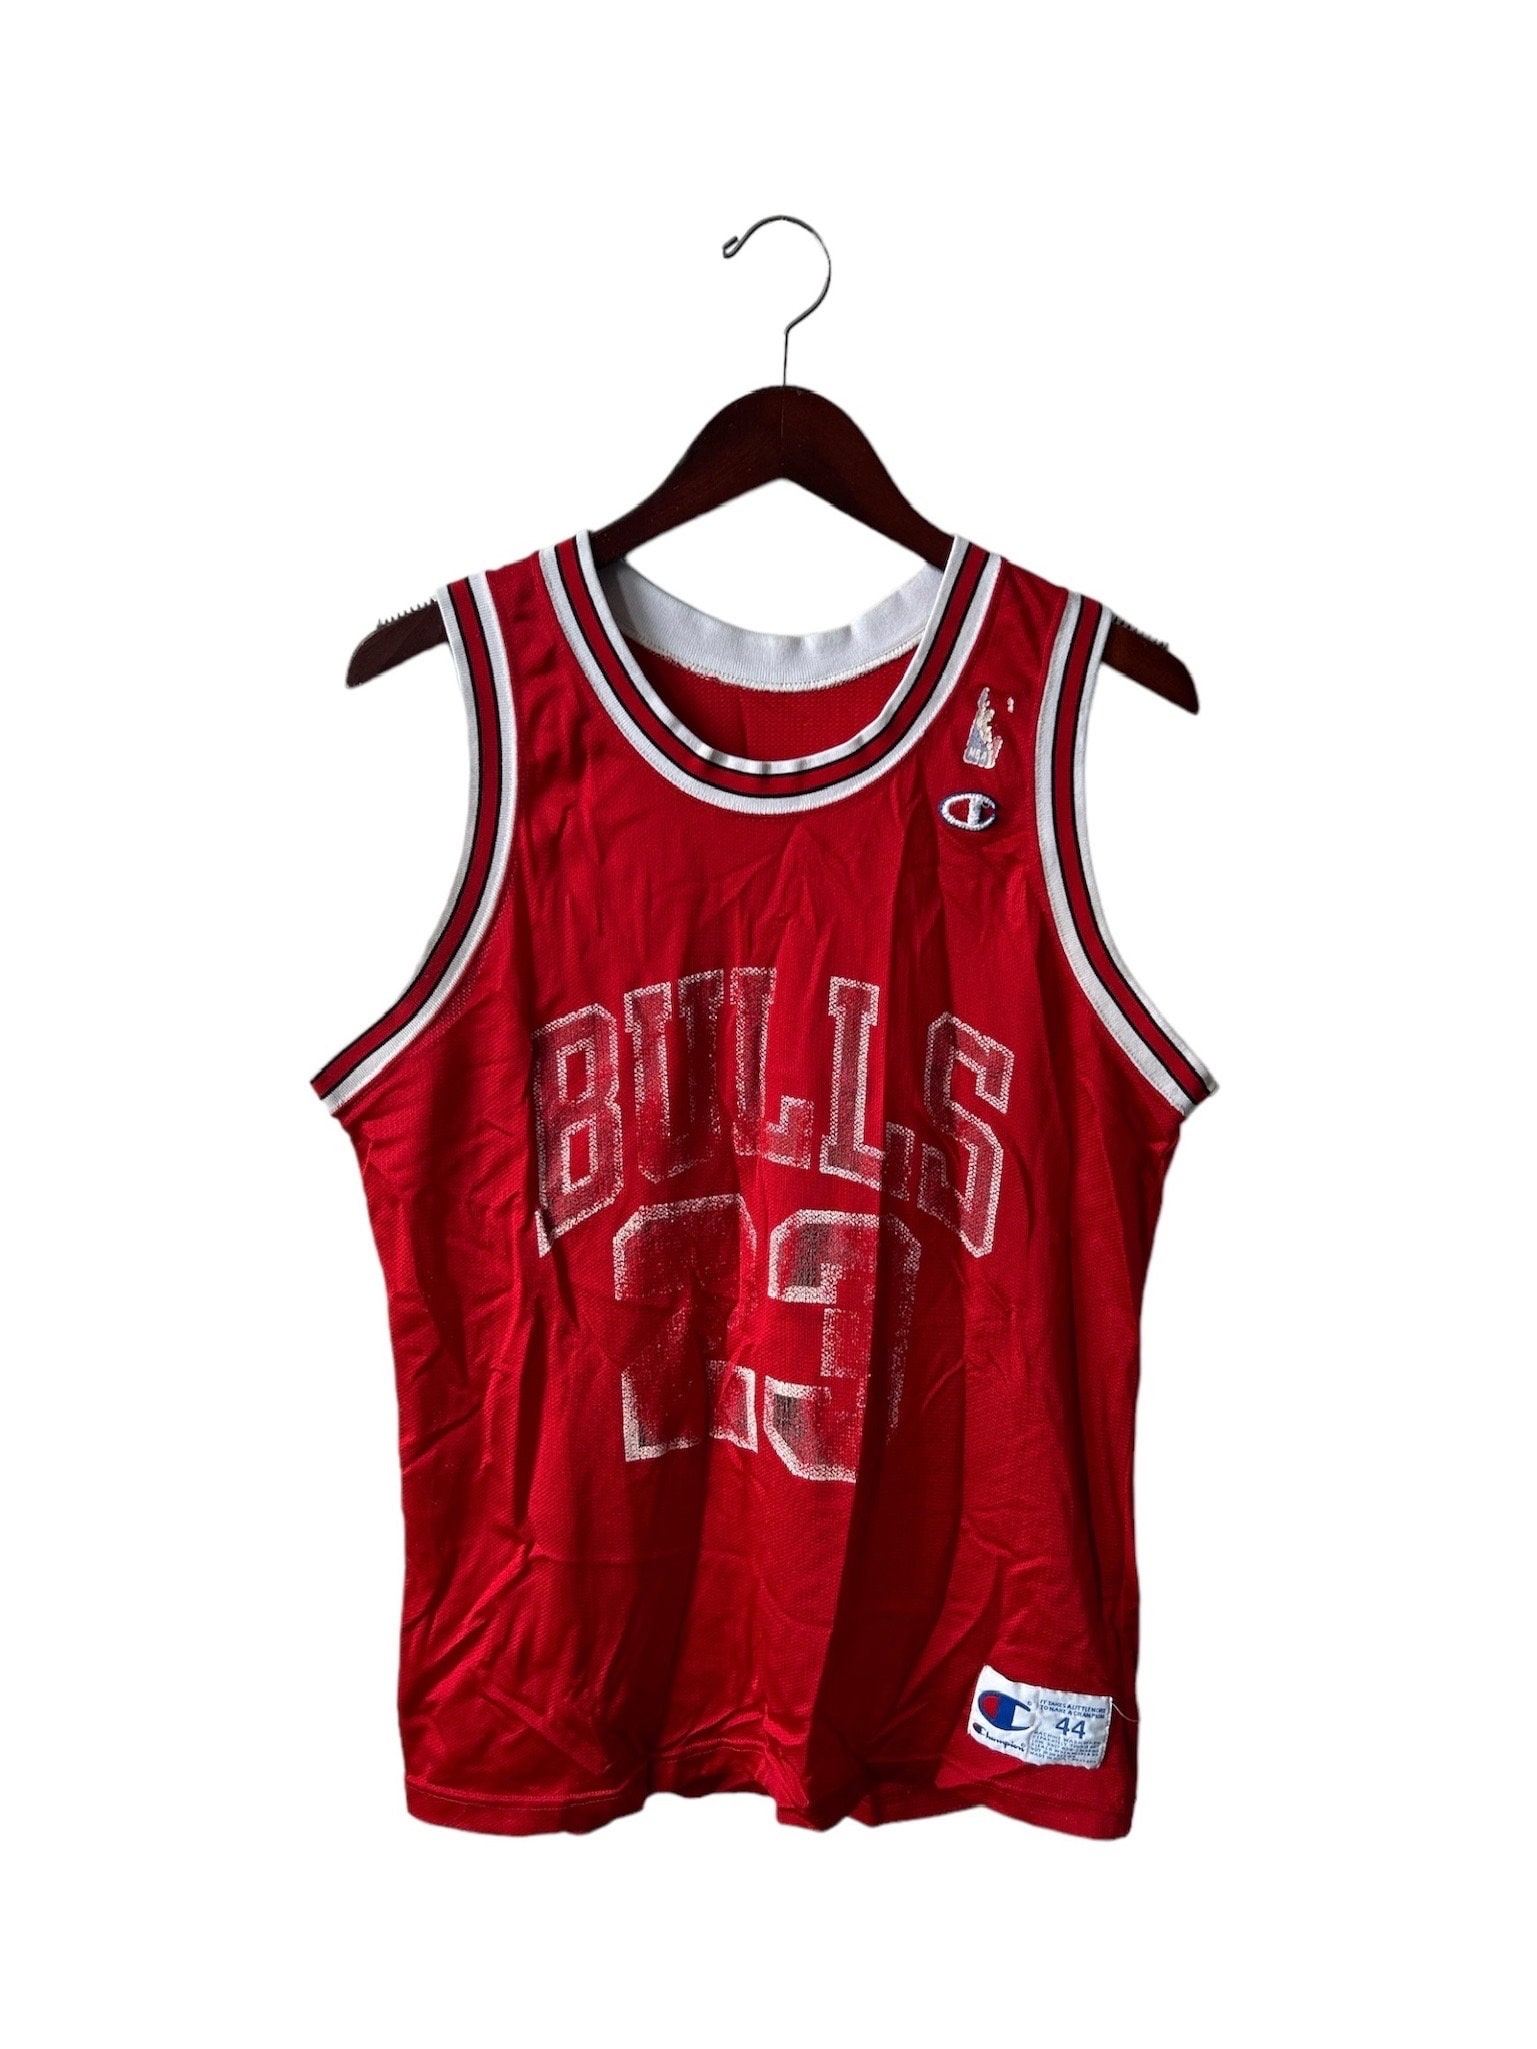 DeMar DeRozan Autographed Chicago Bulls Jersey (COA included) - Size 52